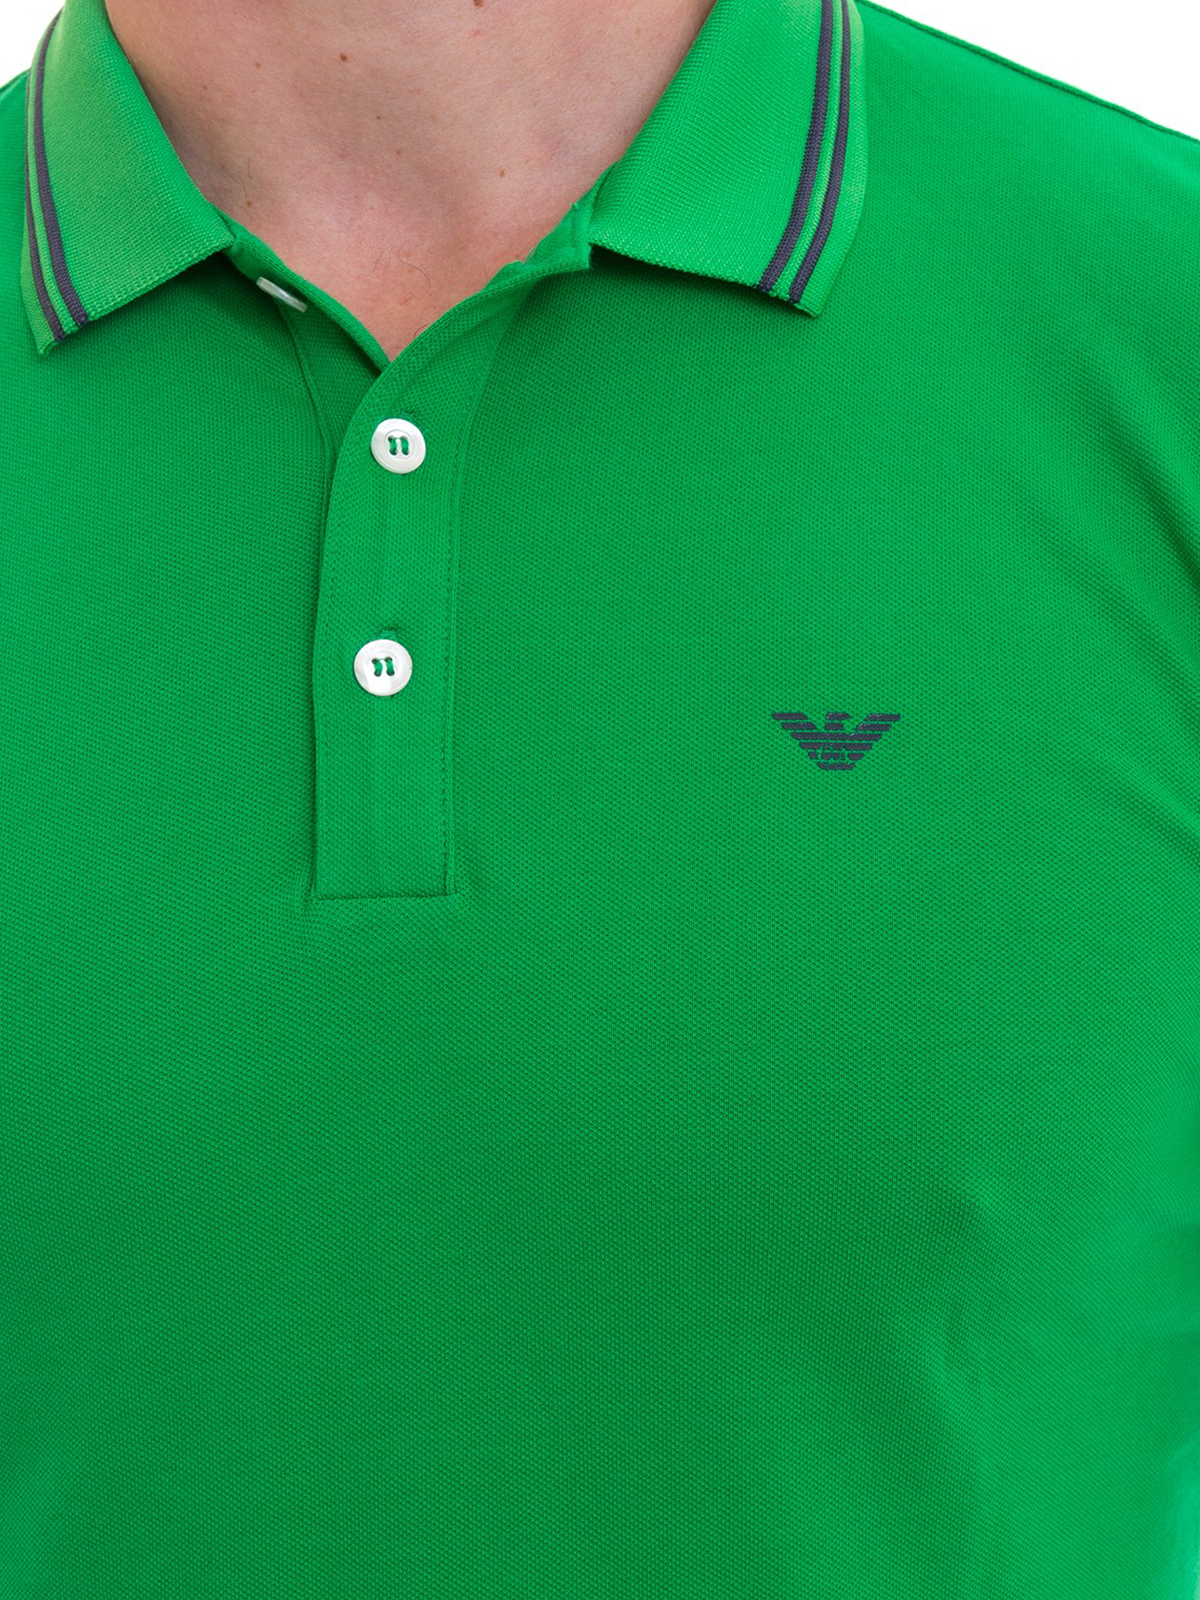 green armani polo shirt